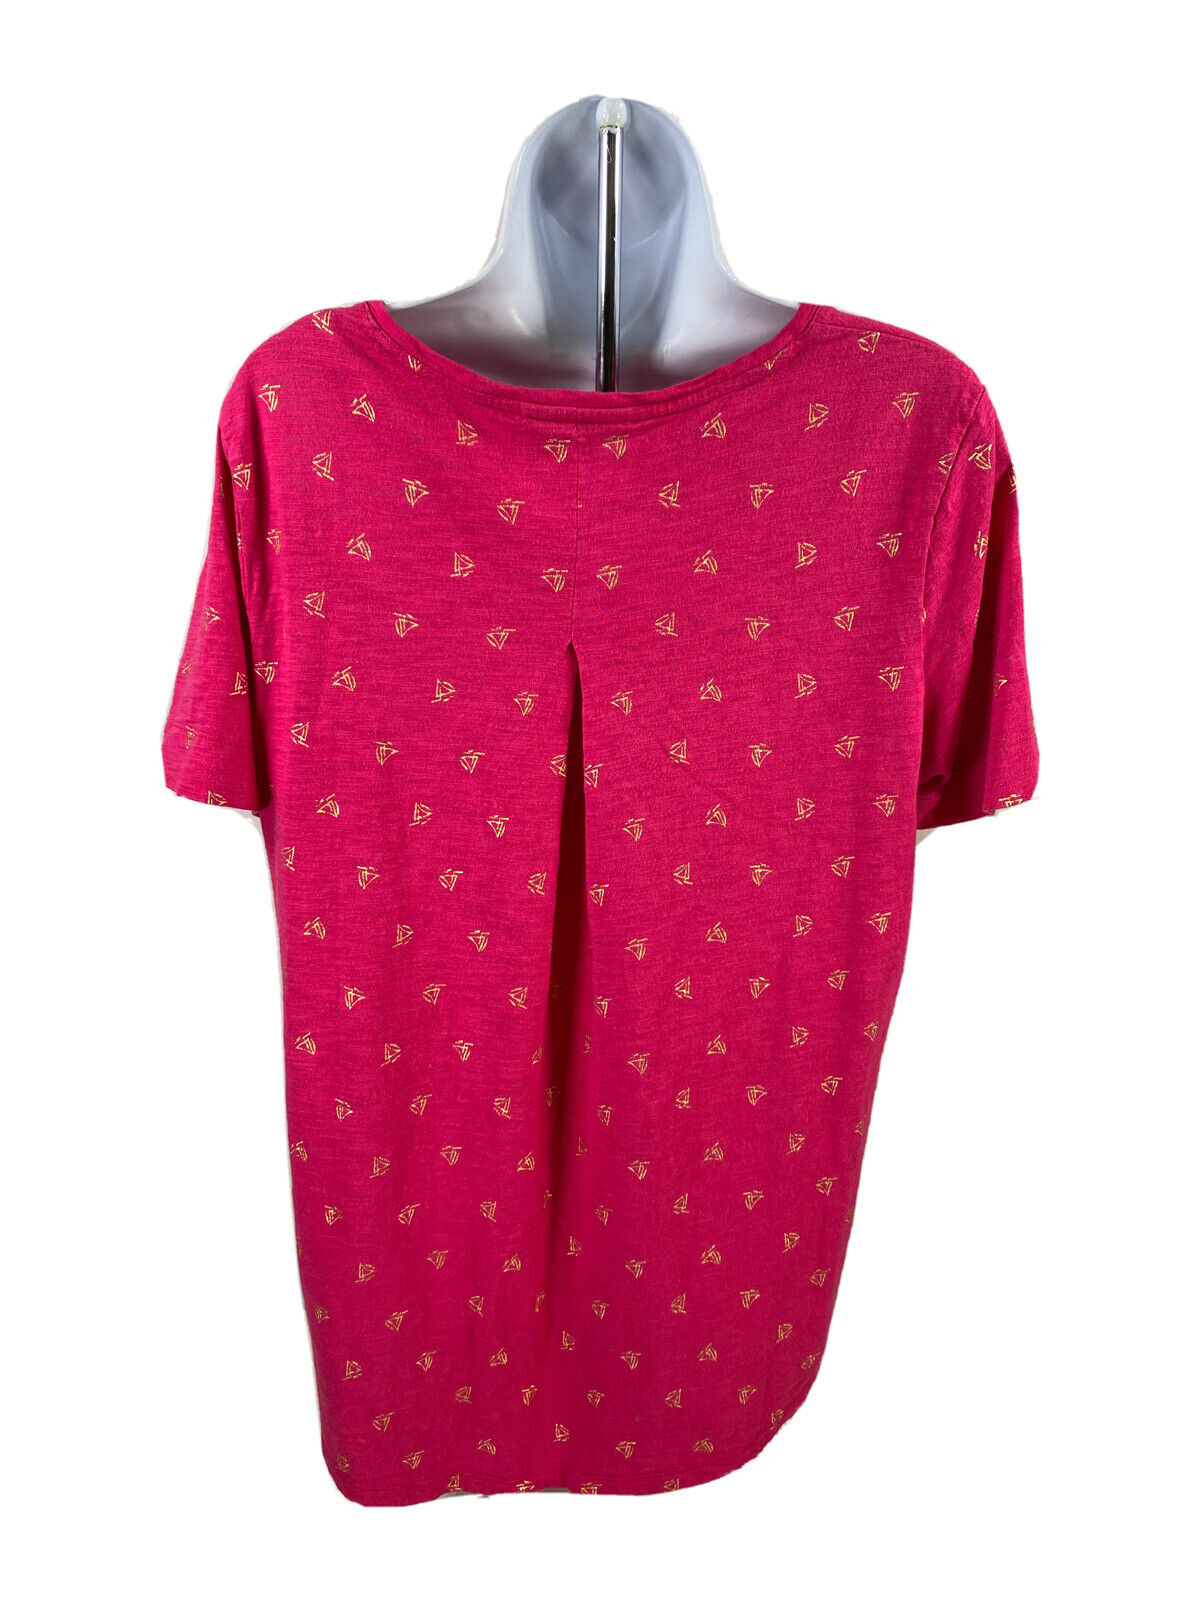 Chico's Women's Pink Sailboat Graphic Short Sleeve T-Shirt - 1 (US M)